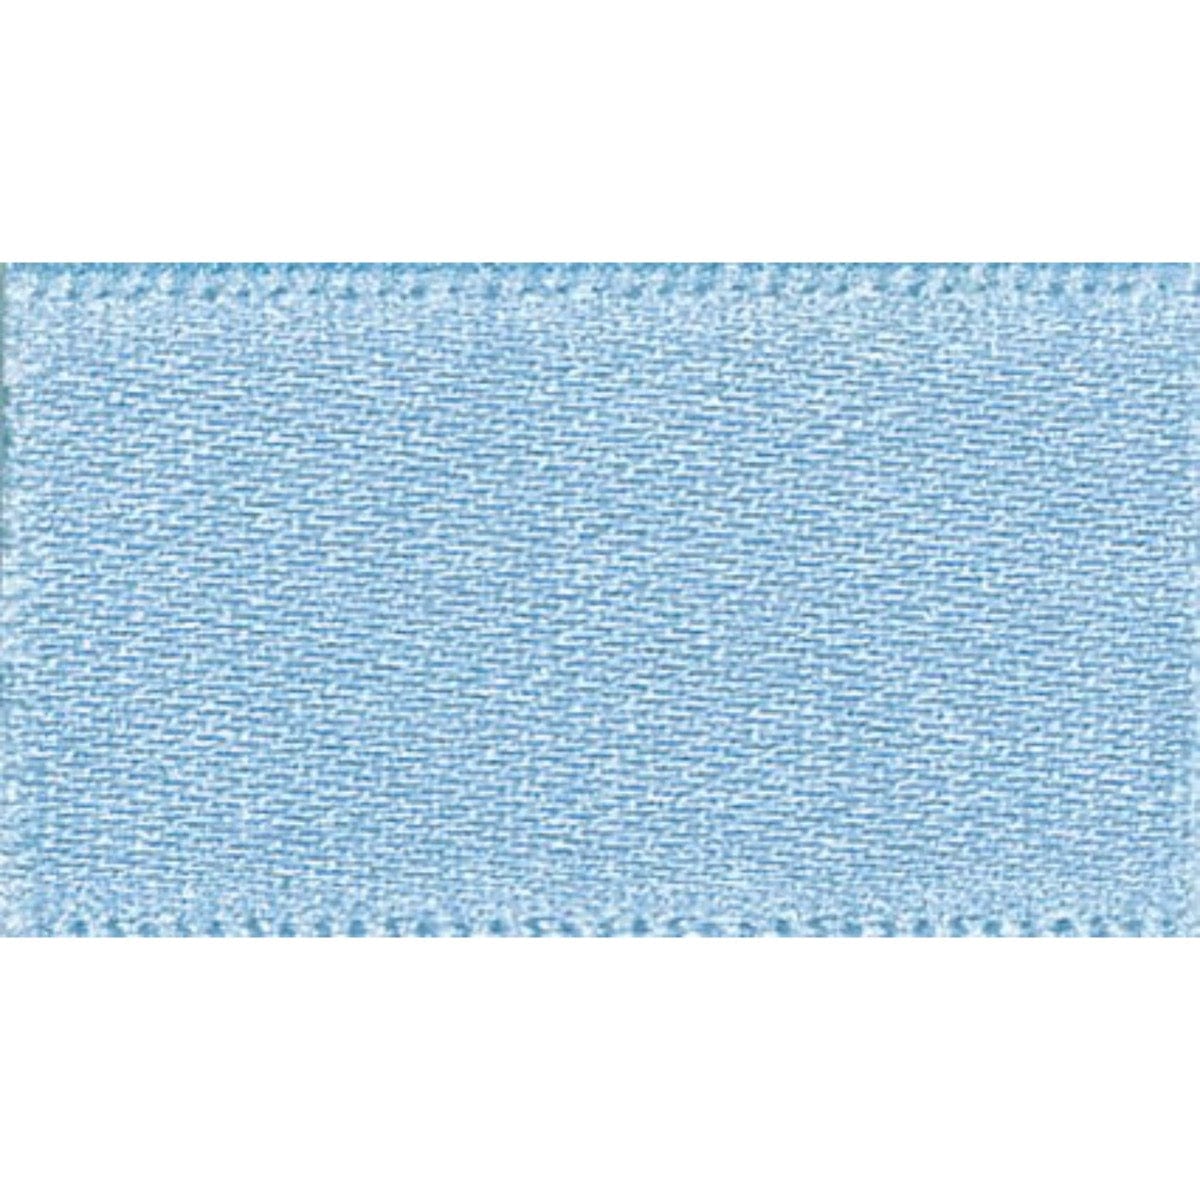 Double Faced Satin Ribbon Cornflower Blue: 35mm wide. Price per metre.